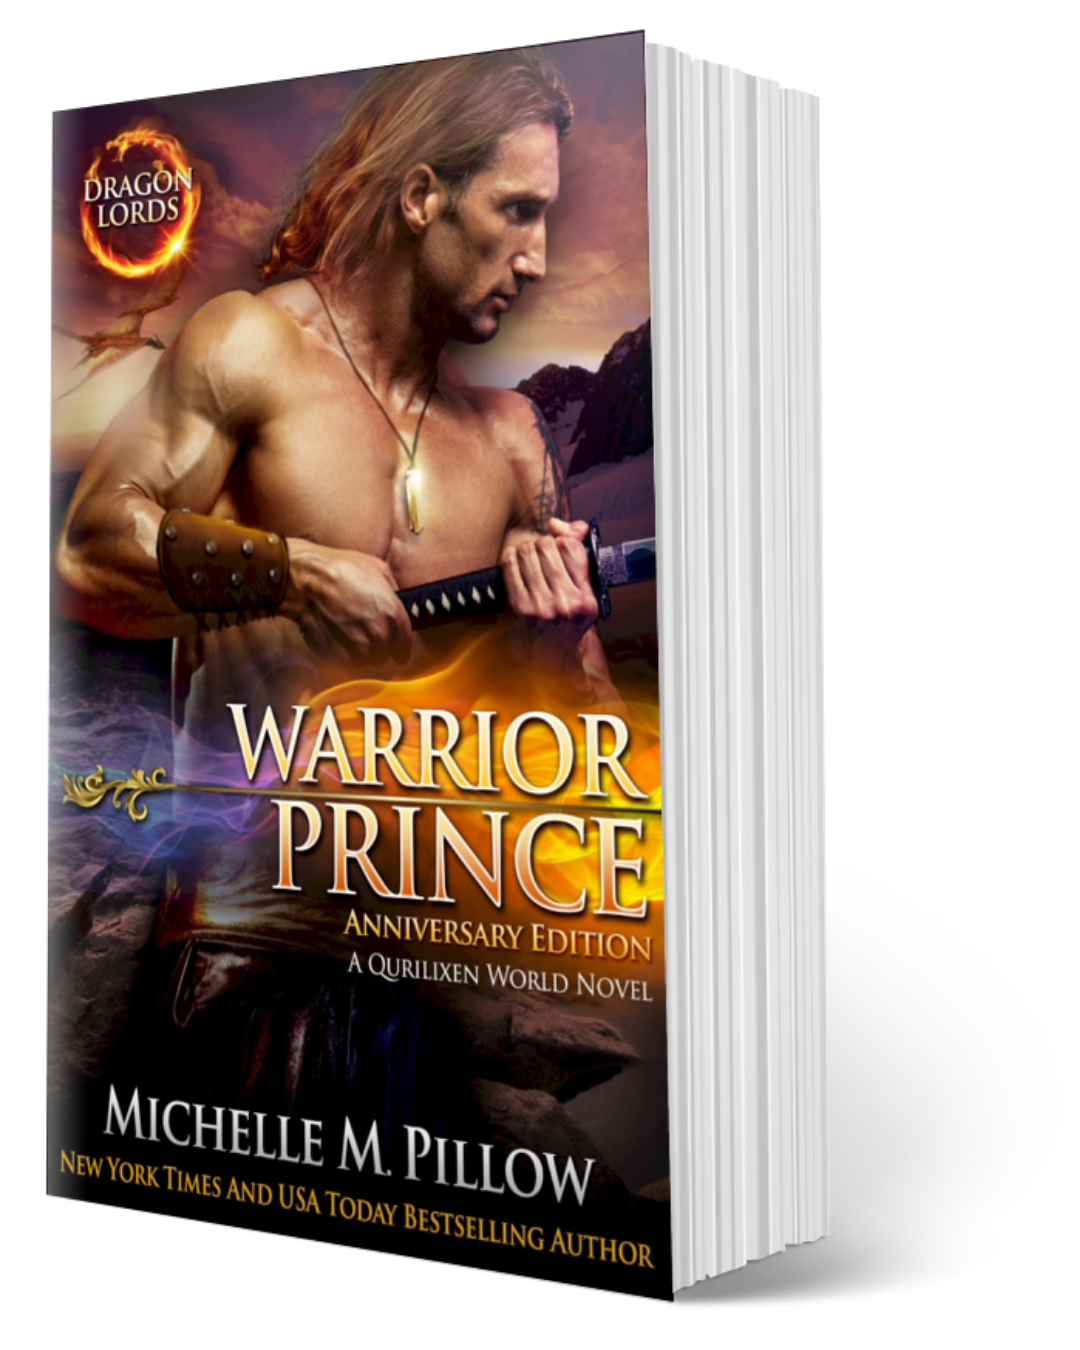 SIGNED PRINT: Warrior Prince